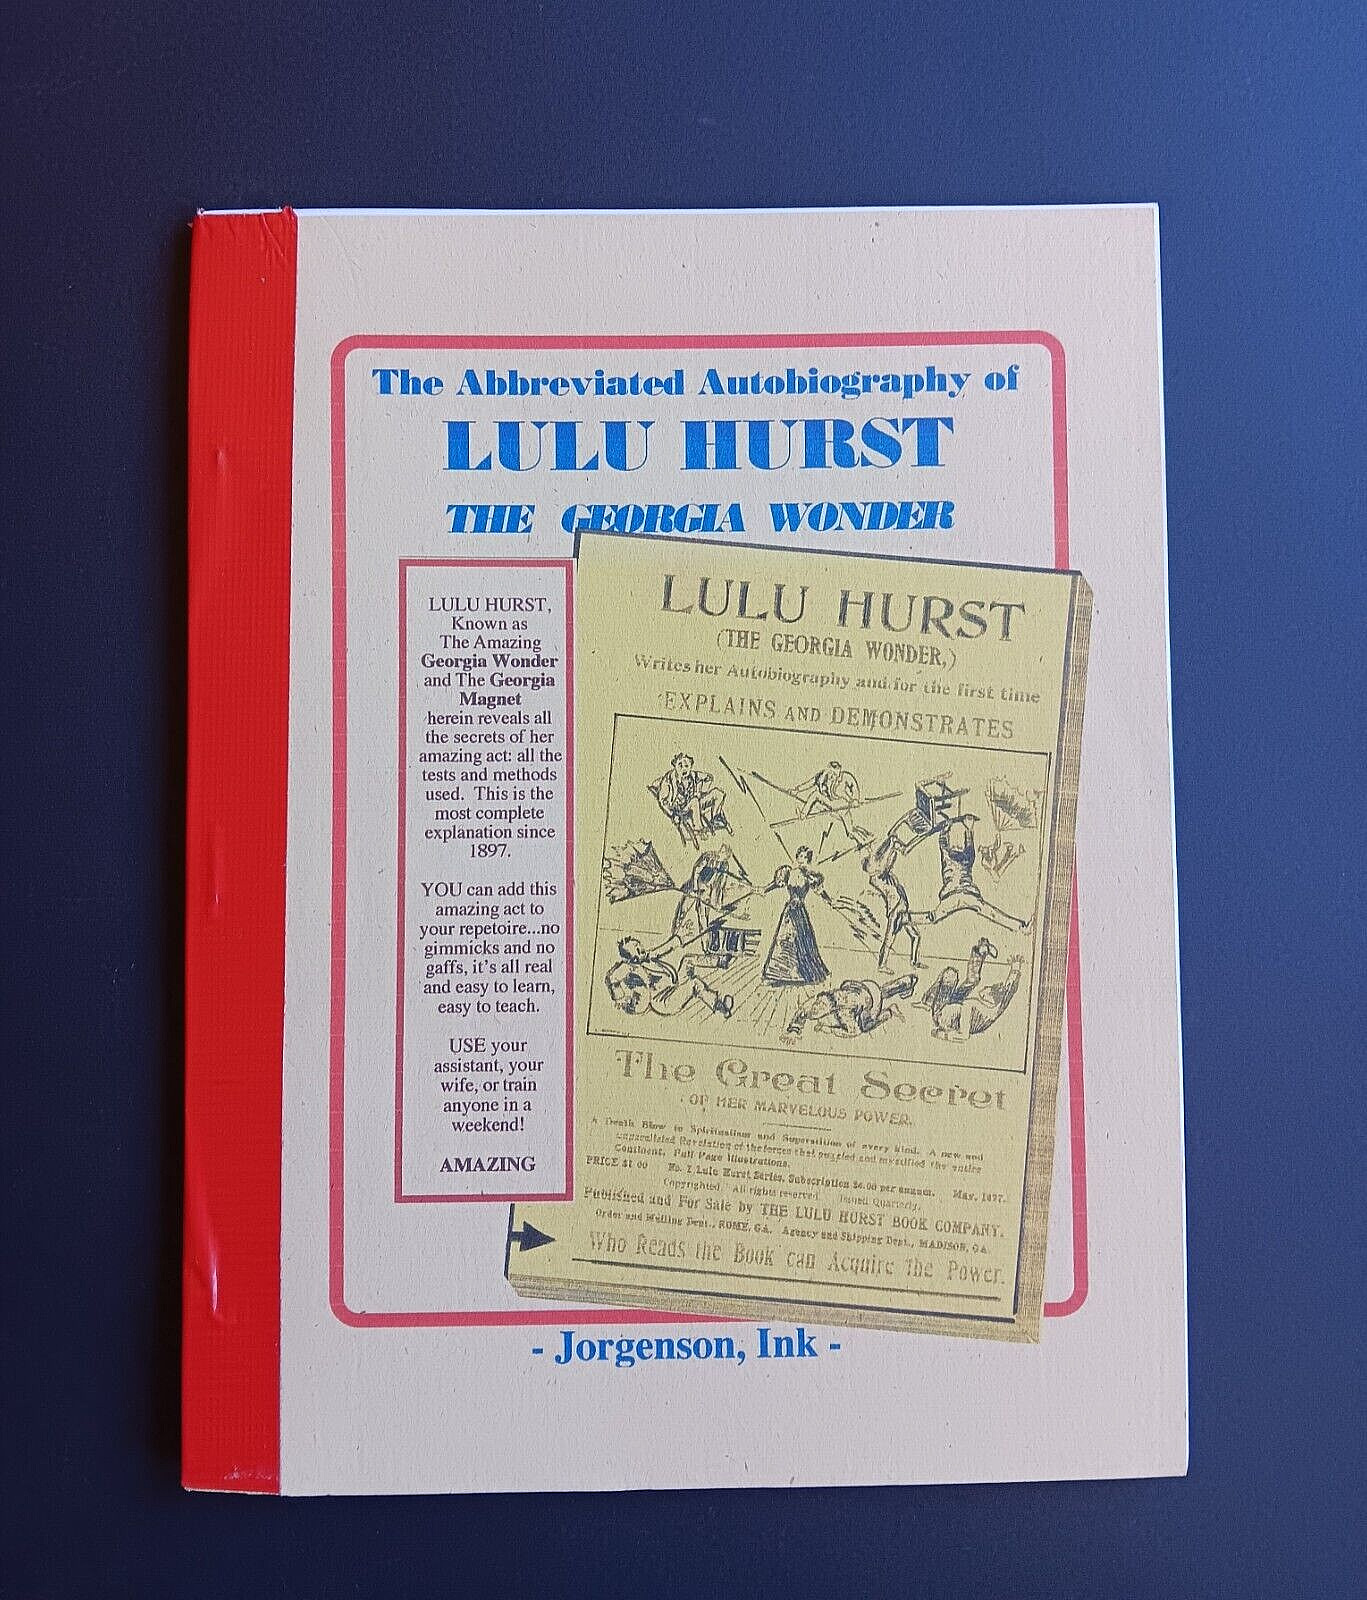 The Abbreviated Autobiography of LULU HURST The Georgia Wonder